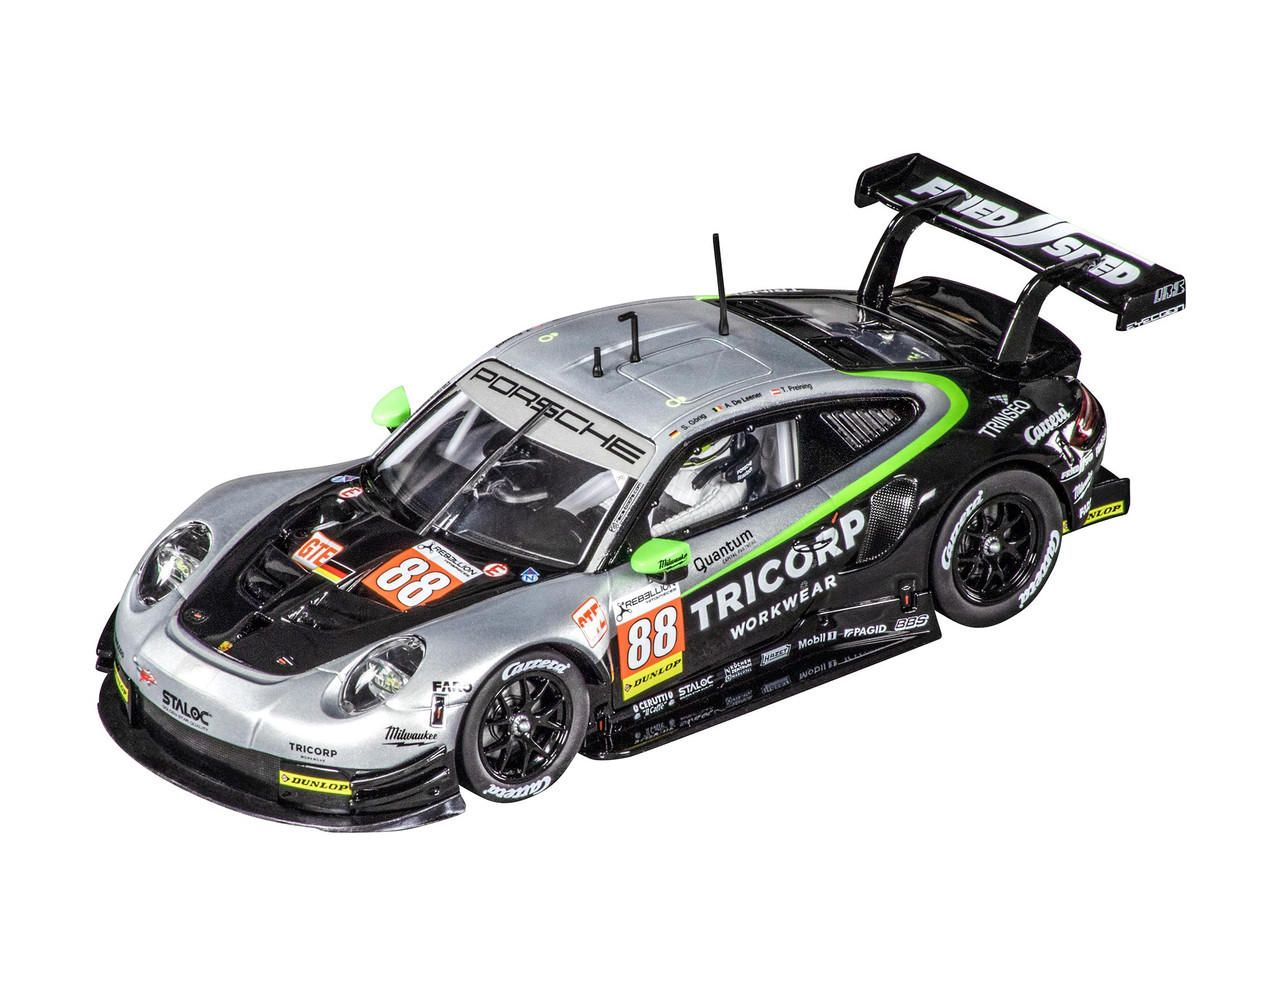 CARRERA 1:32 Digital Slot Car Porsche 911 RSR Proton Comp.  2019 31024  - Jadlam Toys & Models - Buy Toys & Models Online